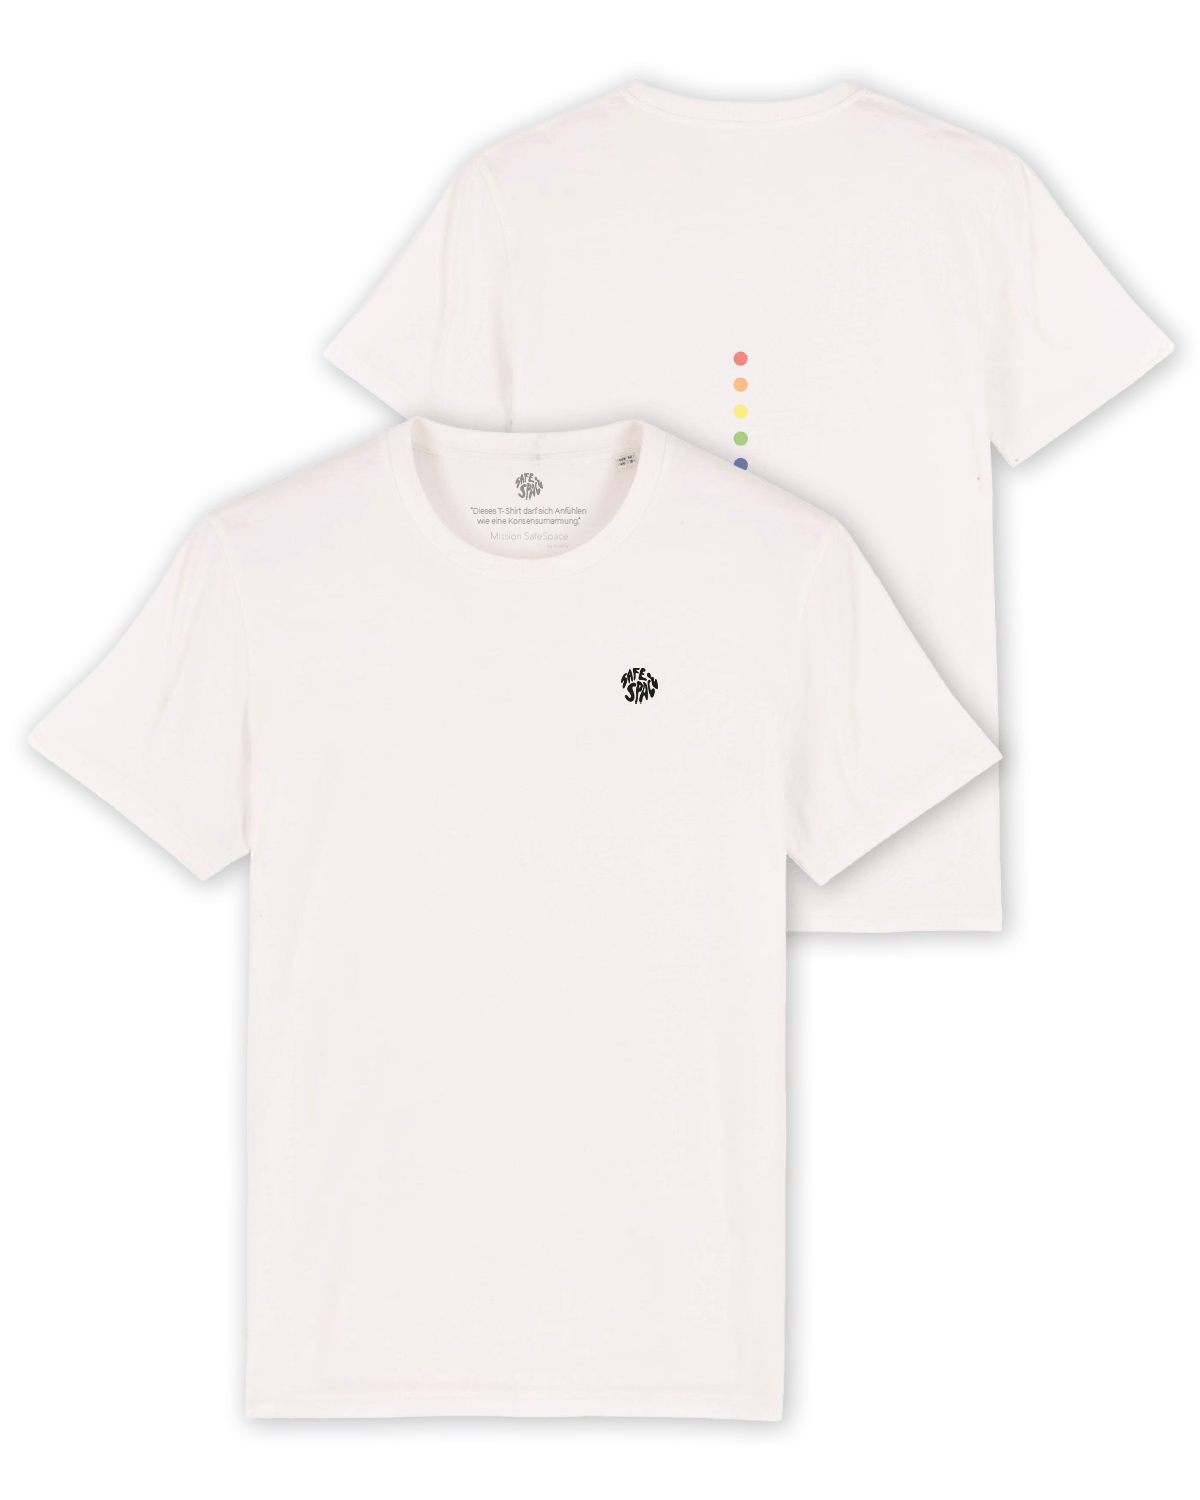 T-Shirt "Pride"